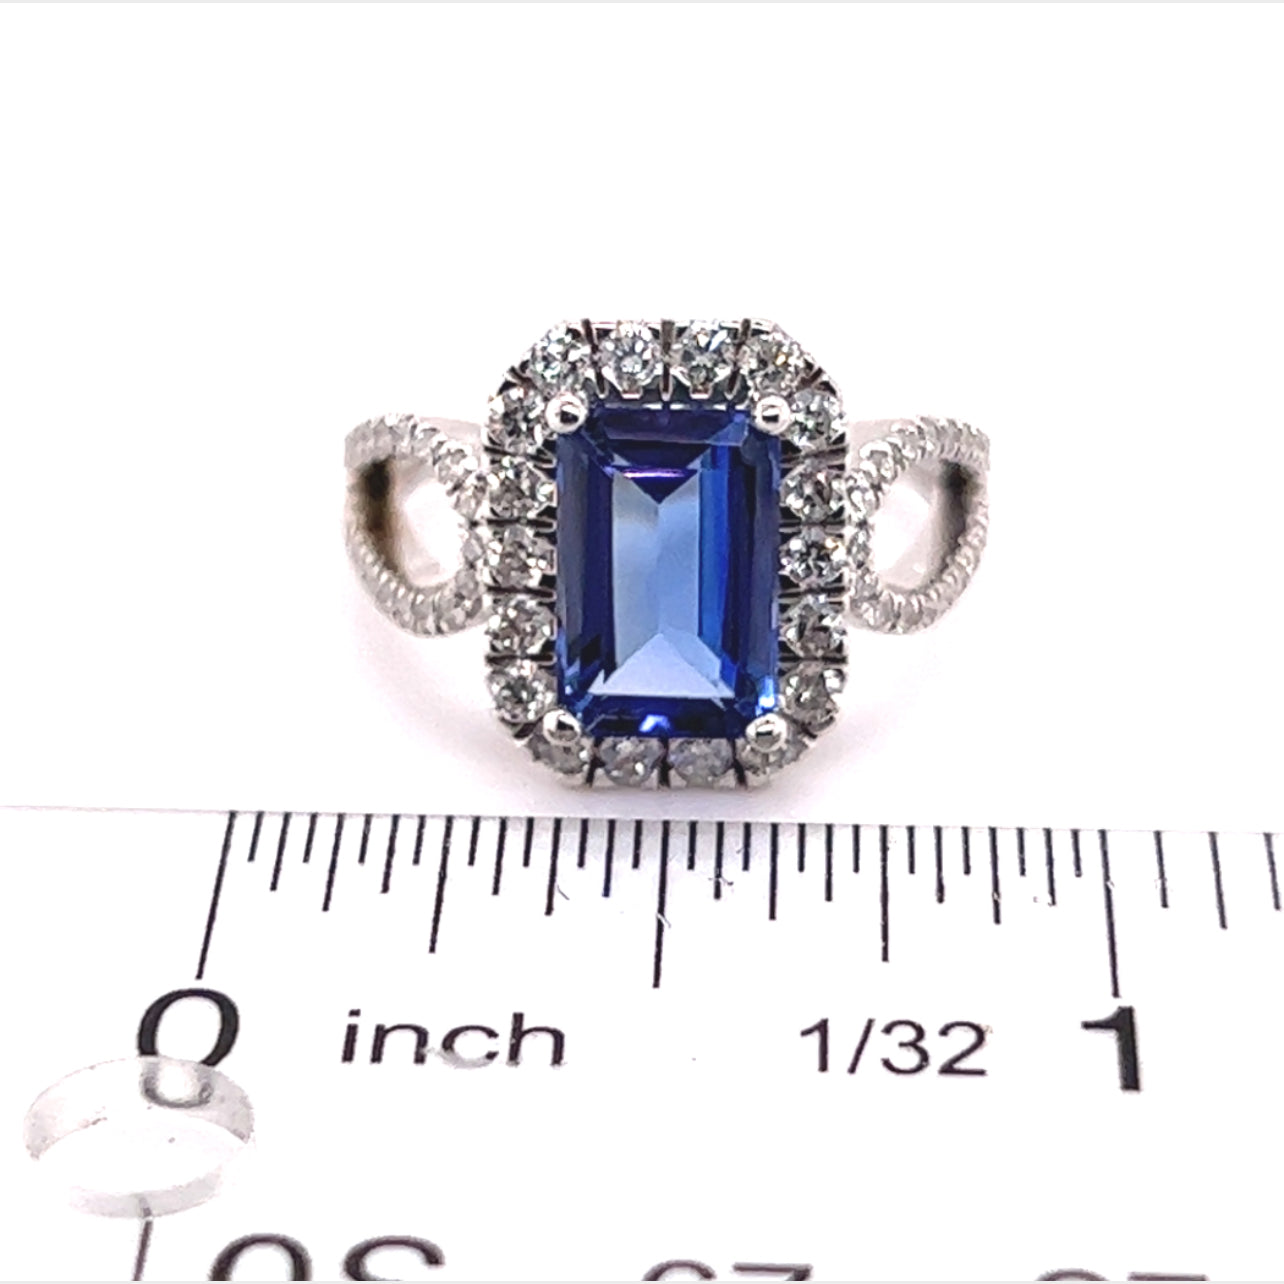 Natural Tanzanite Diamond Ring 14k Gold 5.08 TCW 5.52g Certified $5,950 215423 - Certified Estate Jewelry